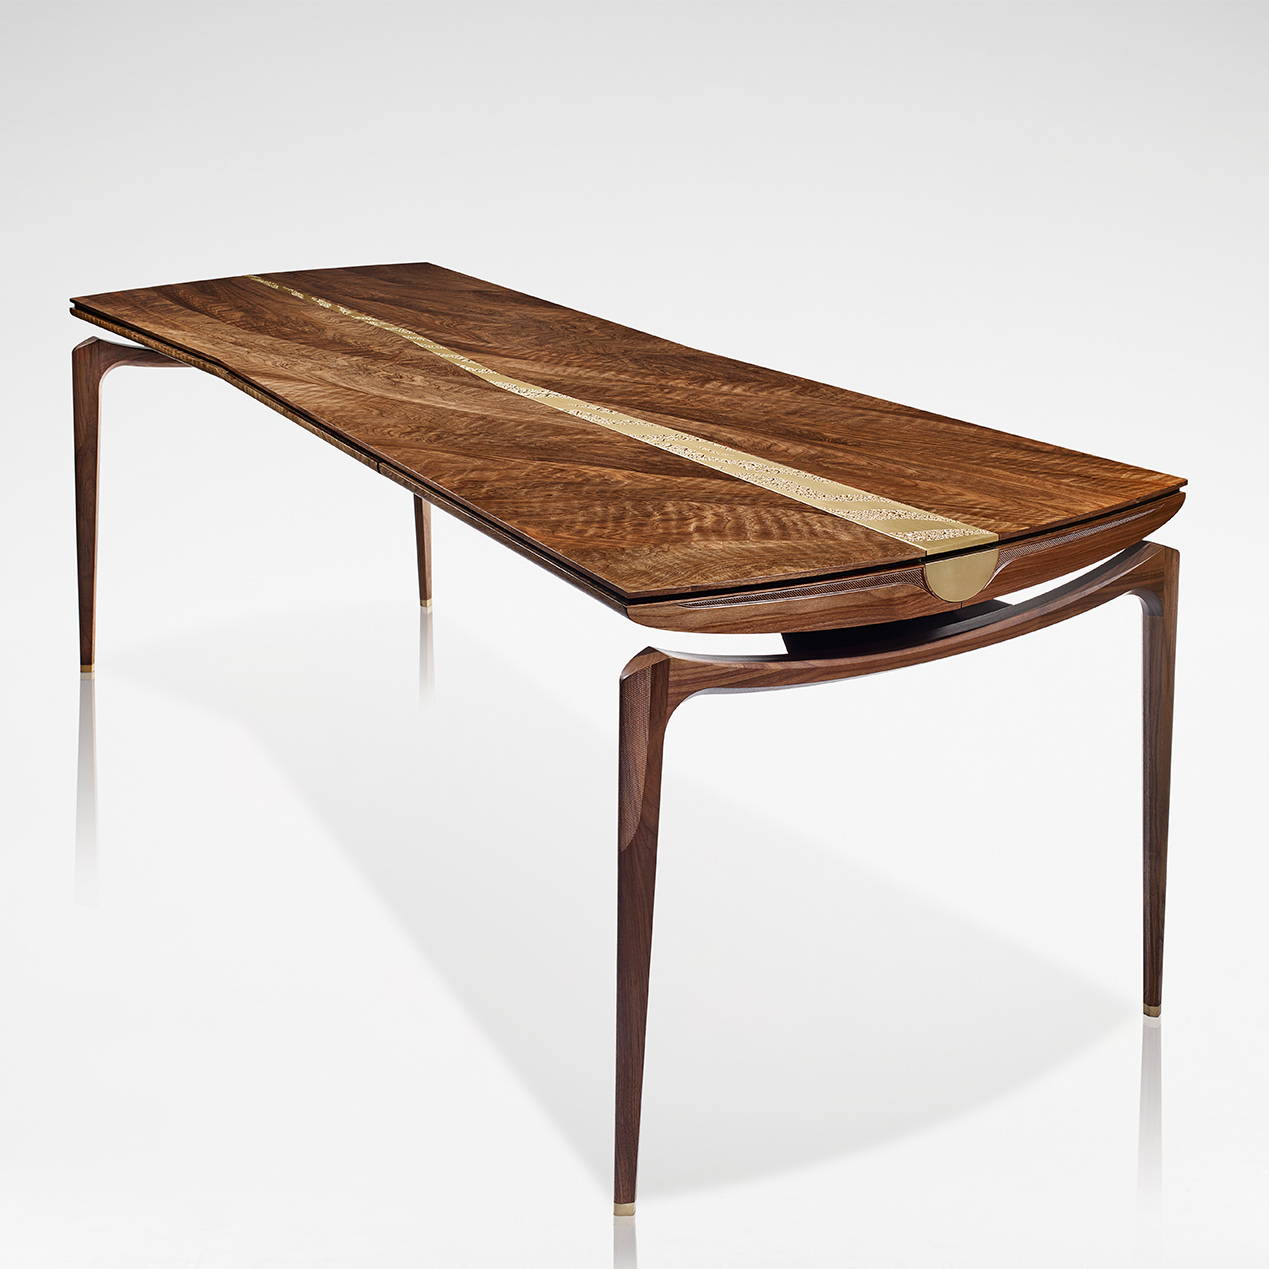 Bespoke Desks | British Bespoke Furniture